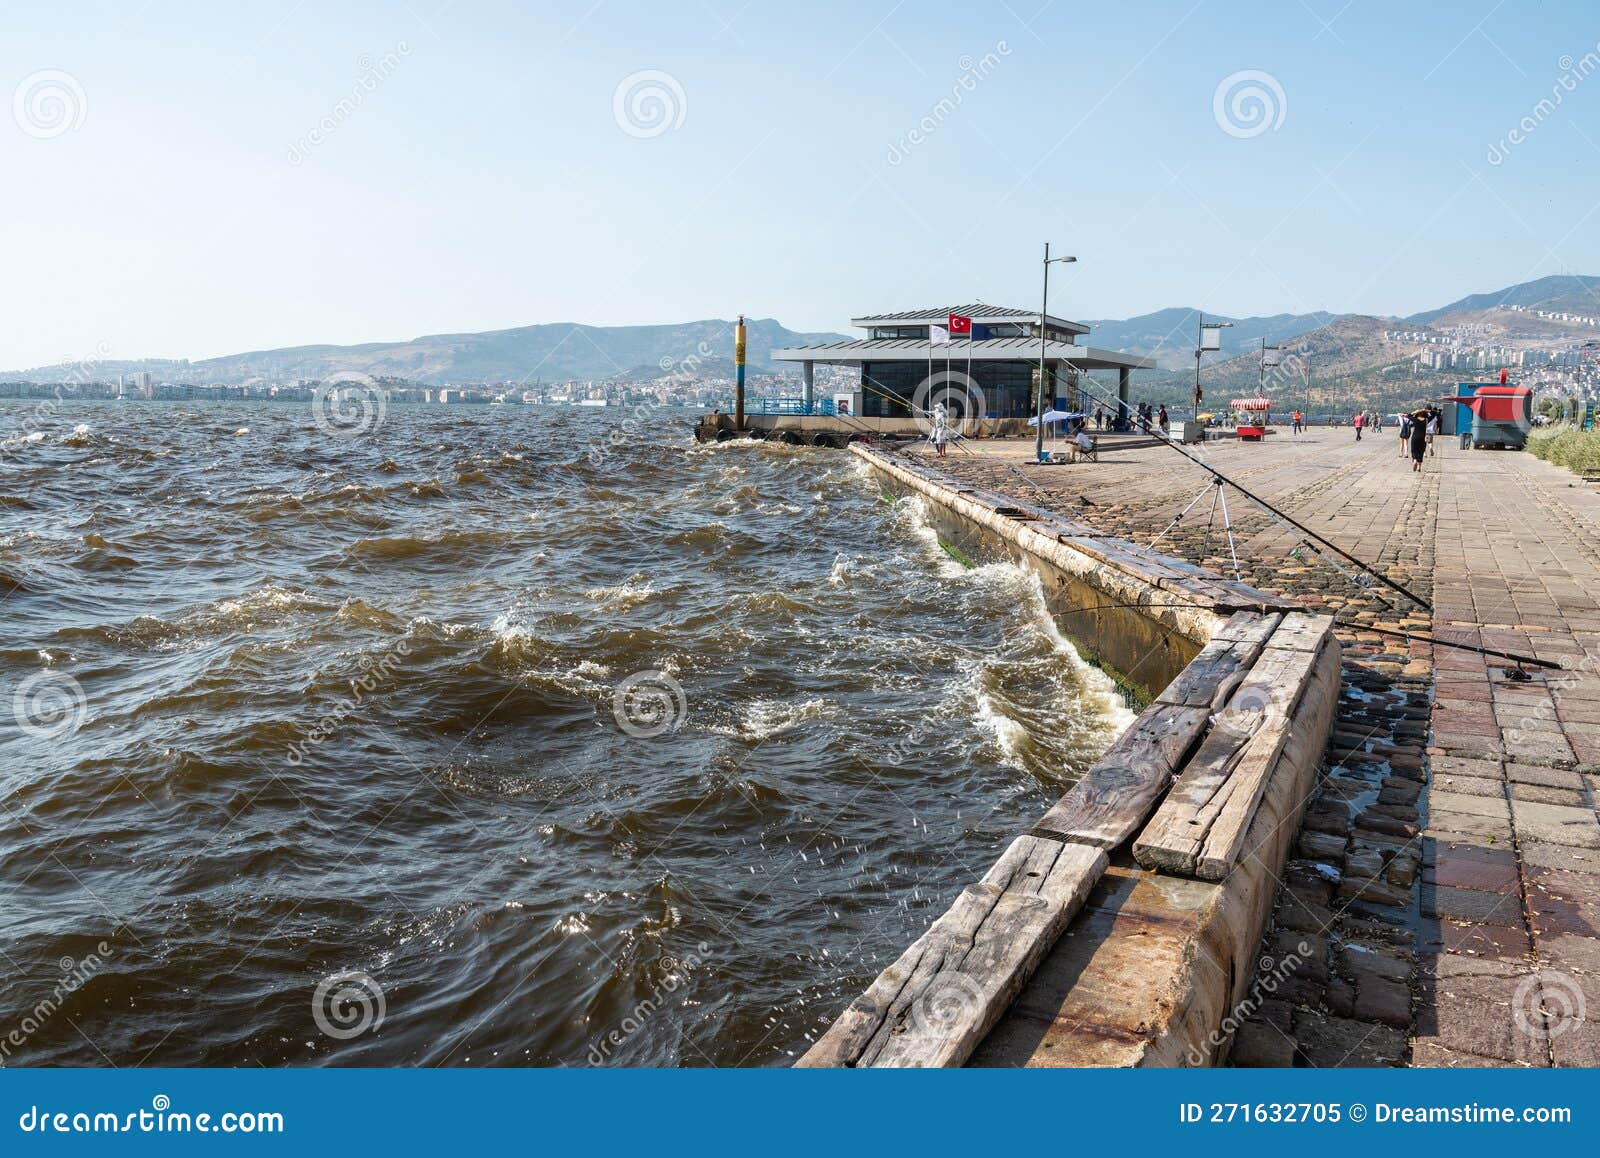 aegean waterfront and promenade in alsancak neighborhood of izmir, turkey